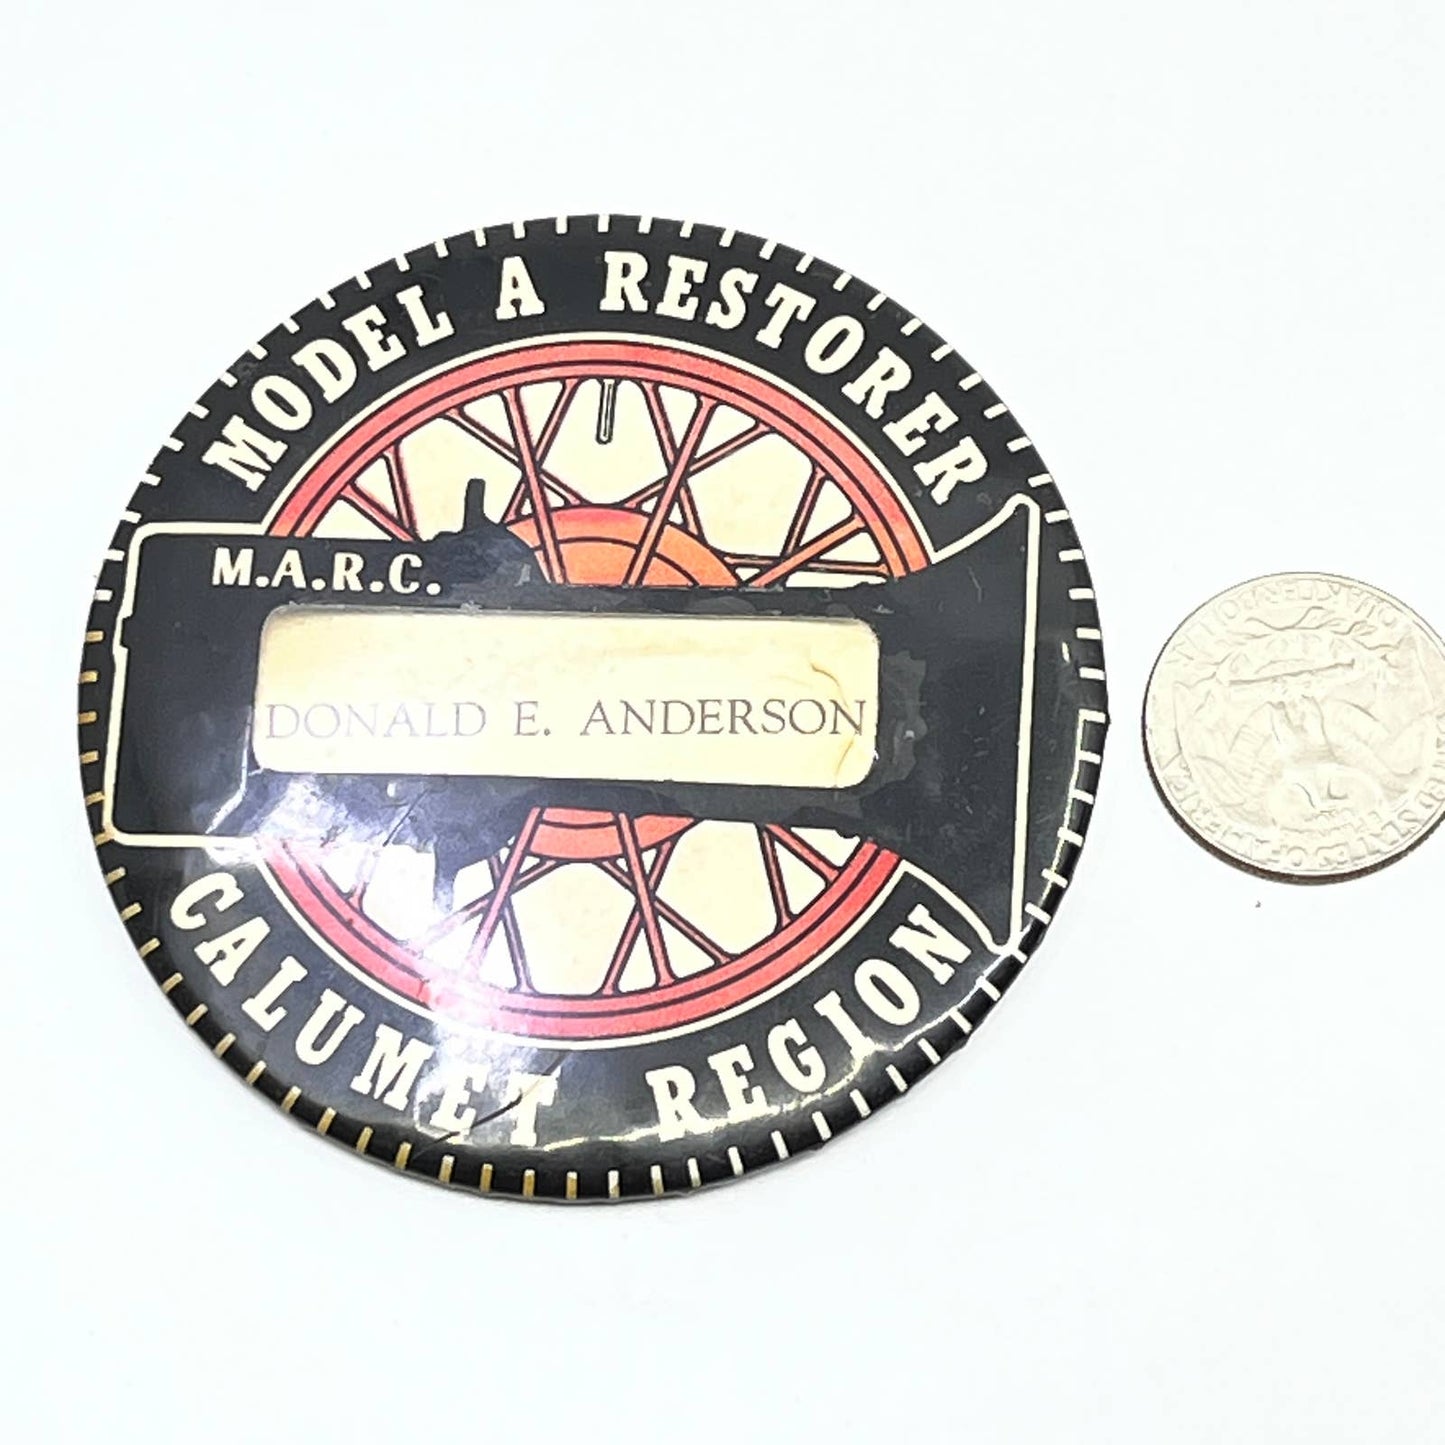 Vintage Model A Restorer Calumet Region Donald E. Anderson Pinback Button SD9